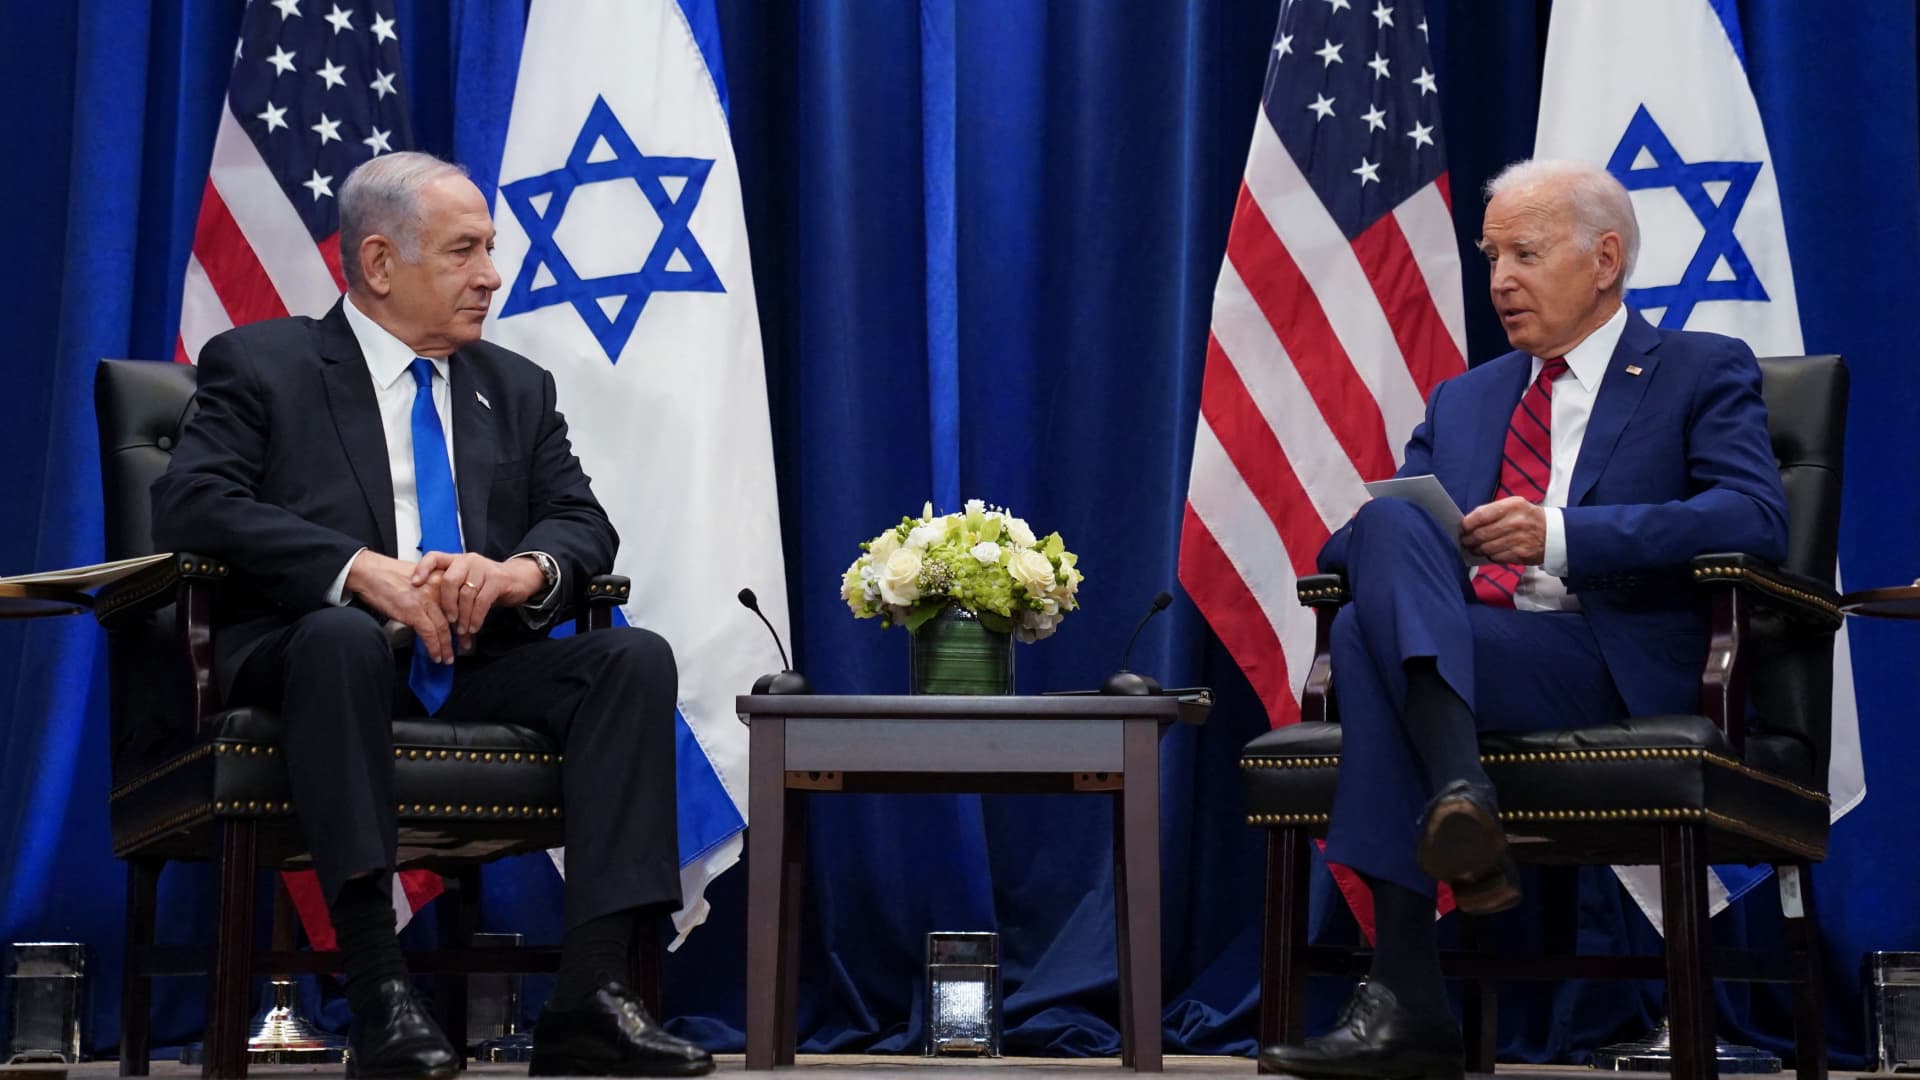 Netanyahu says Israel and Saudi Arabia ‘can forge a historic peace’ with Biden’s help